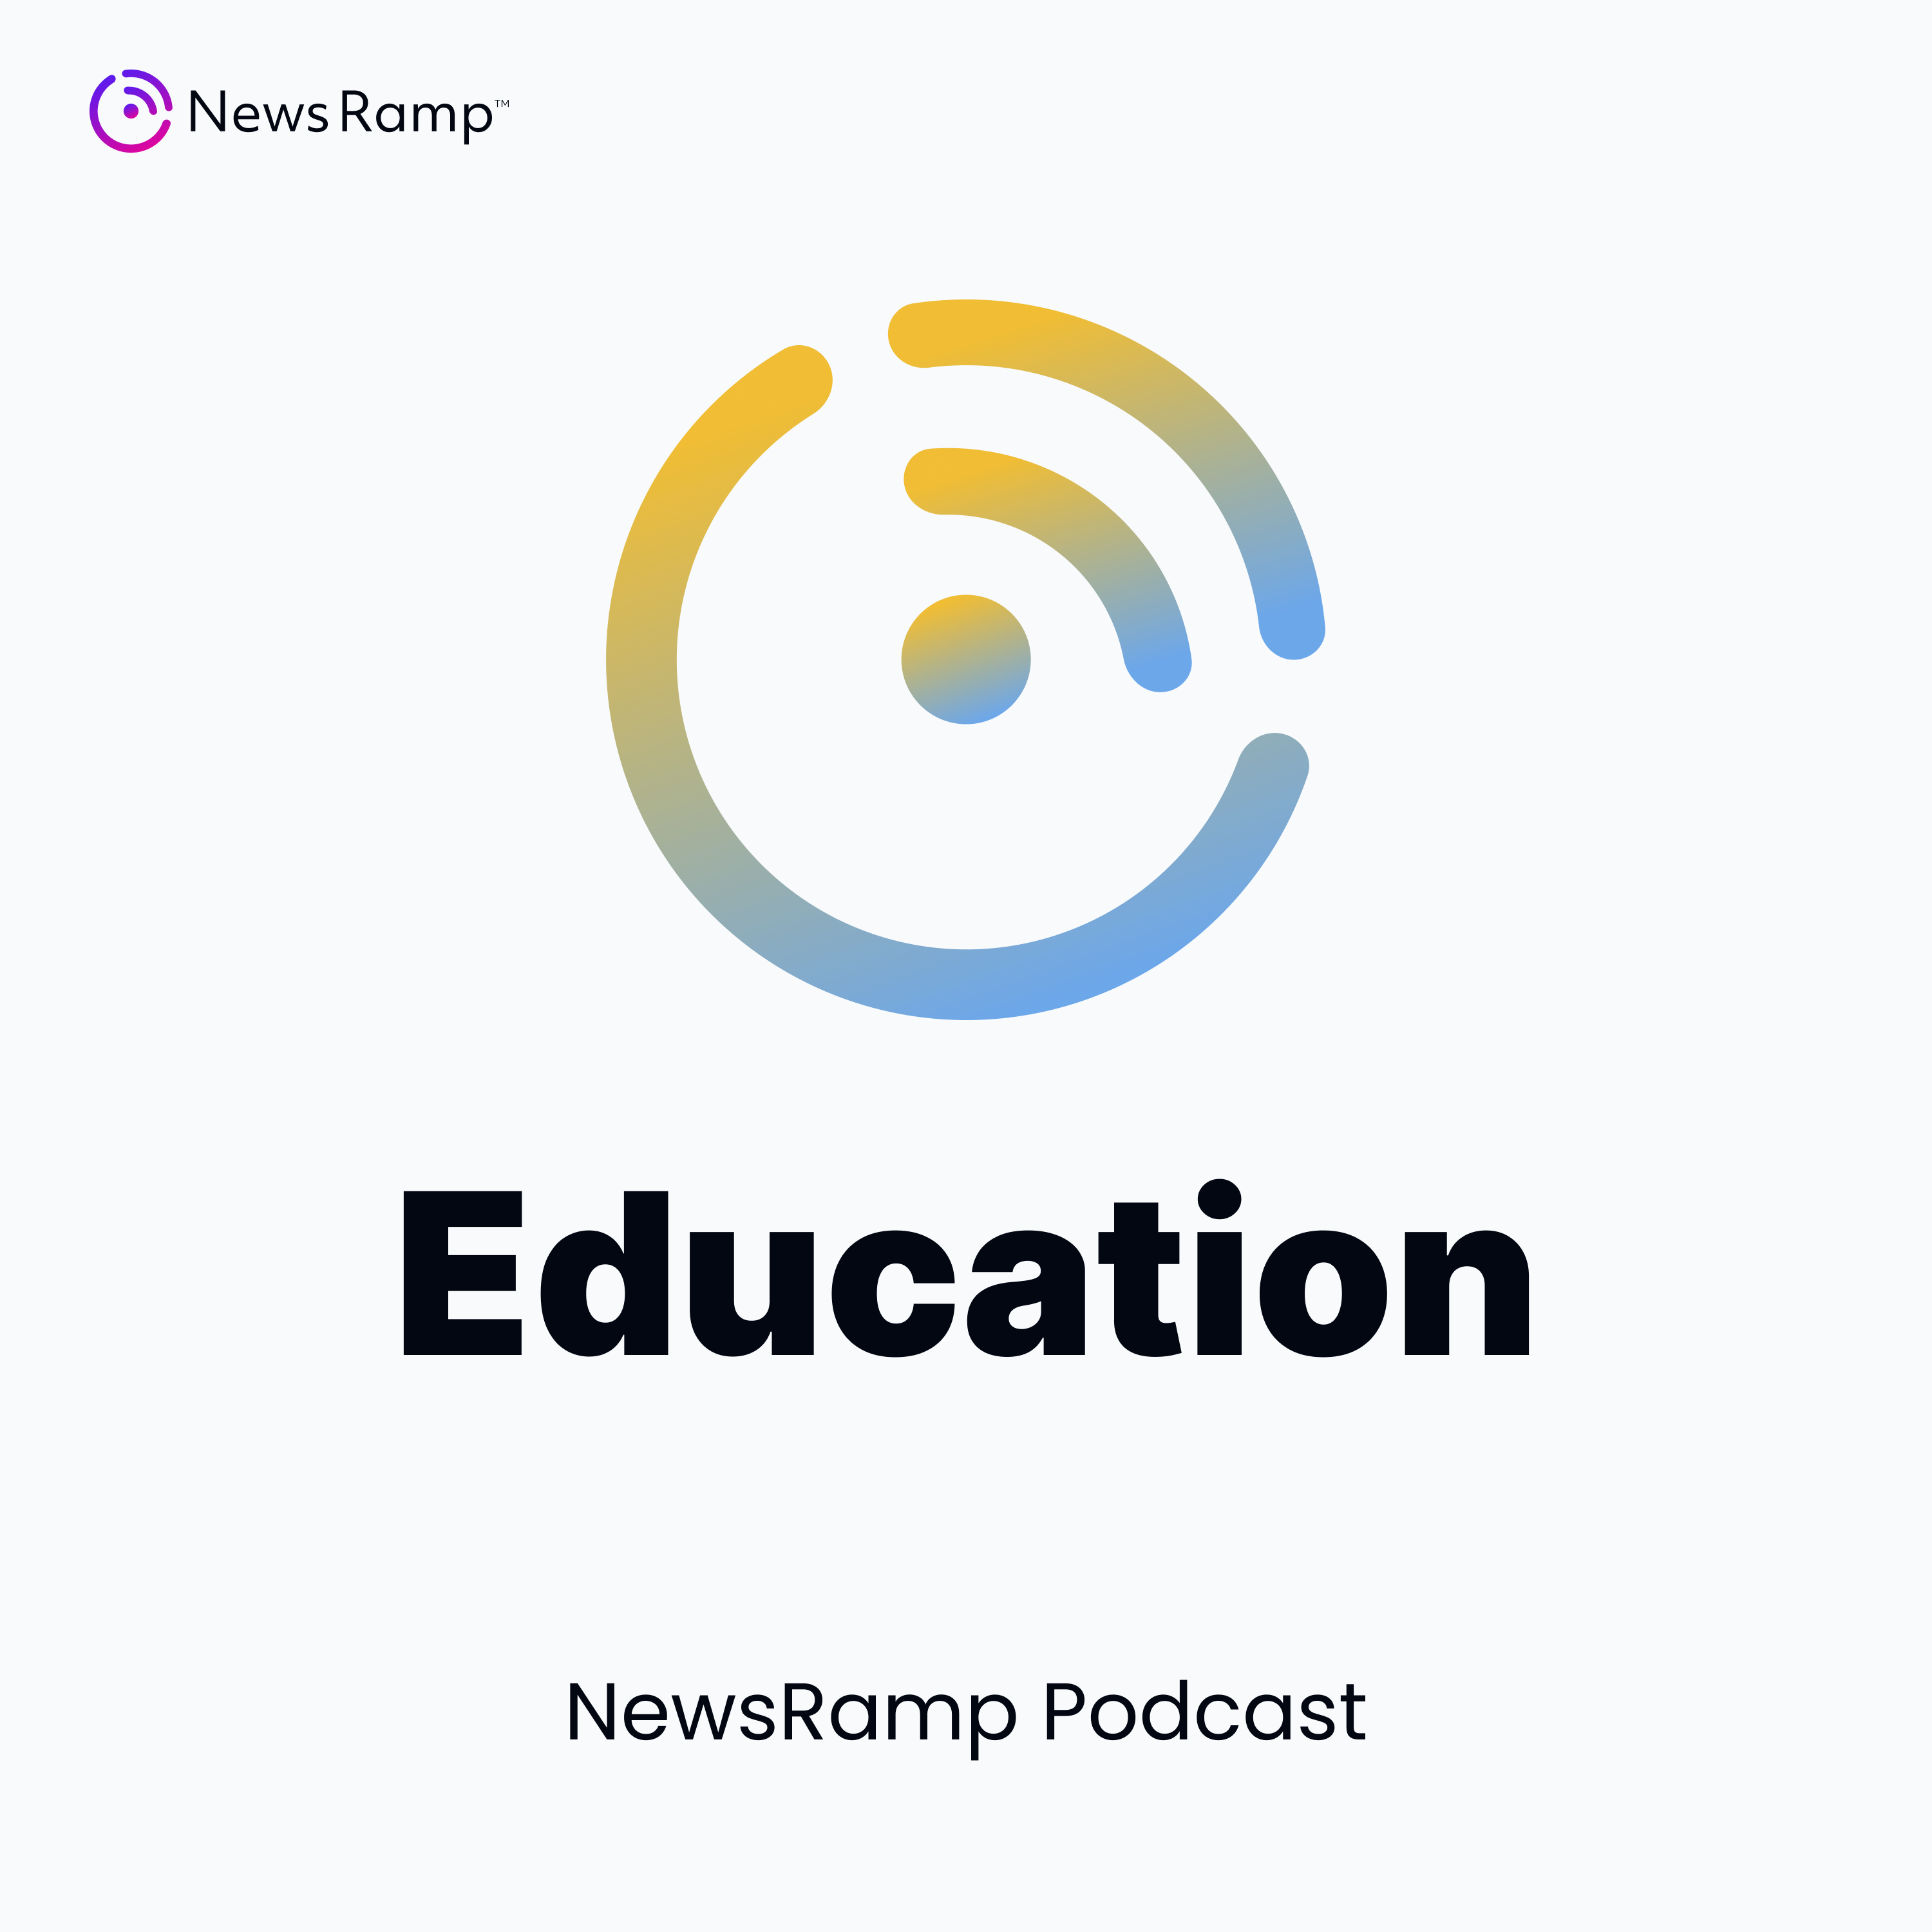 NewsRamp Education Podcast